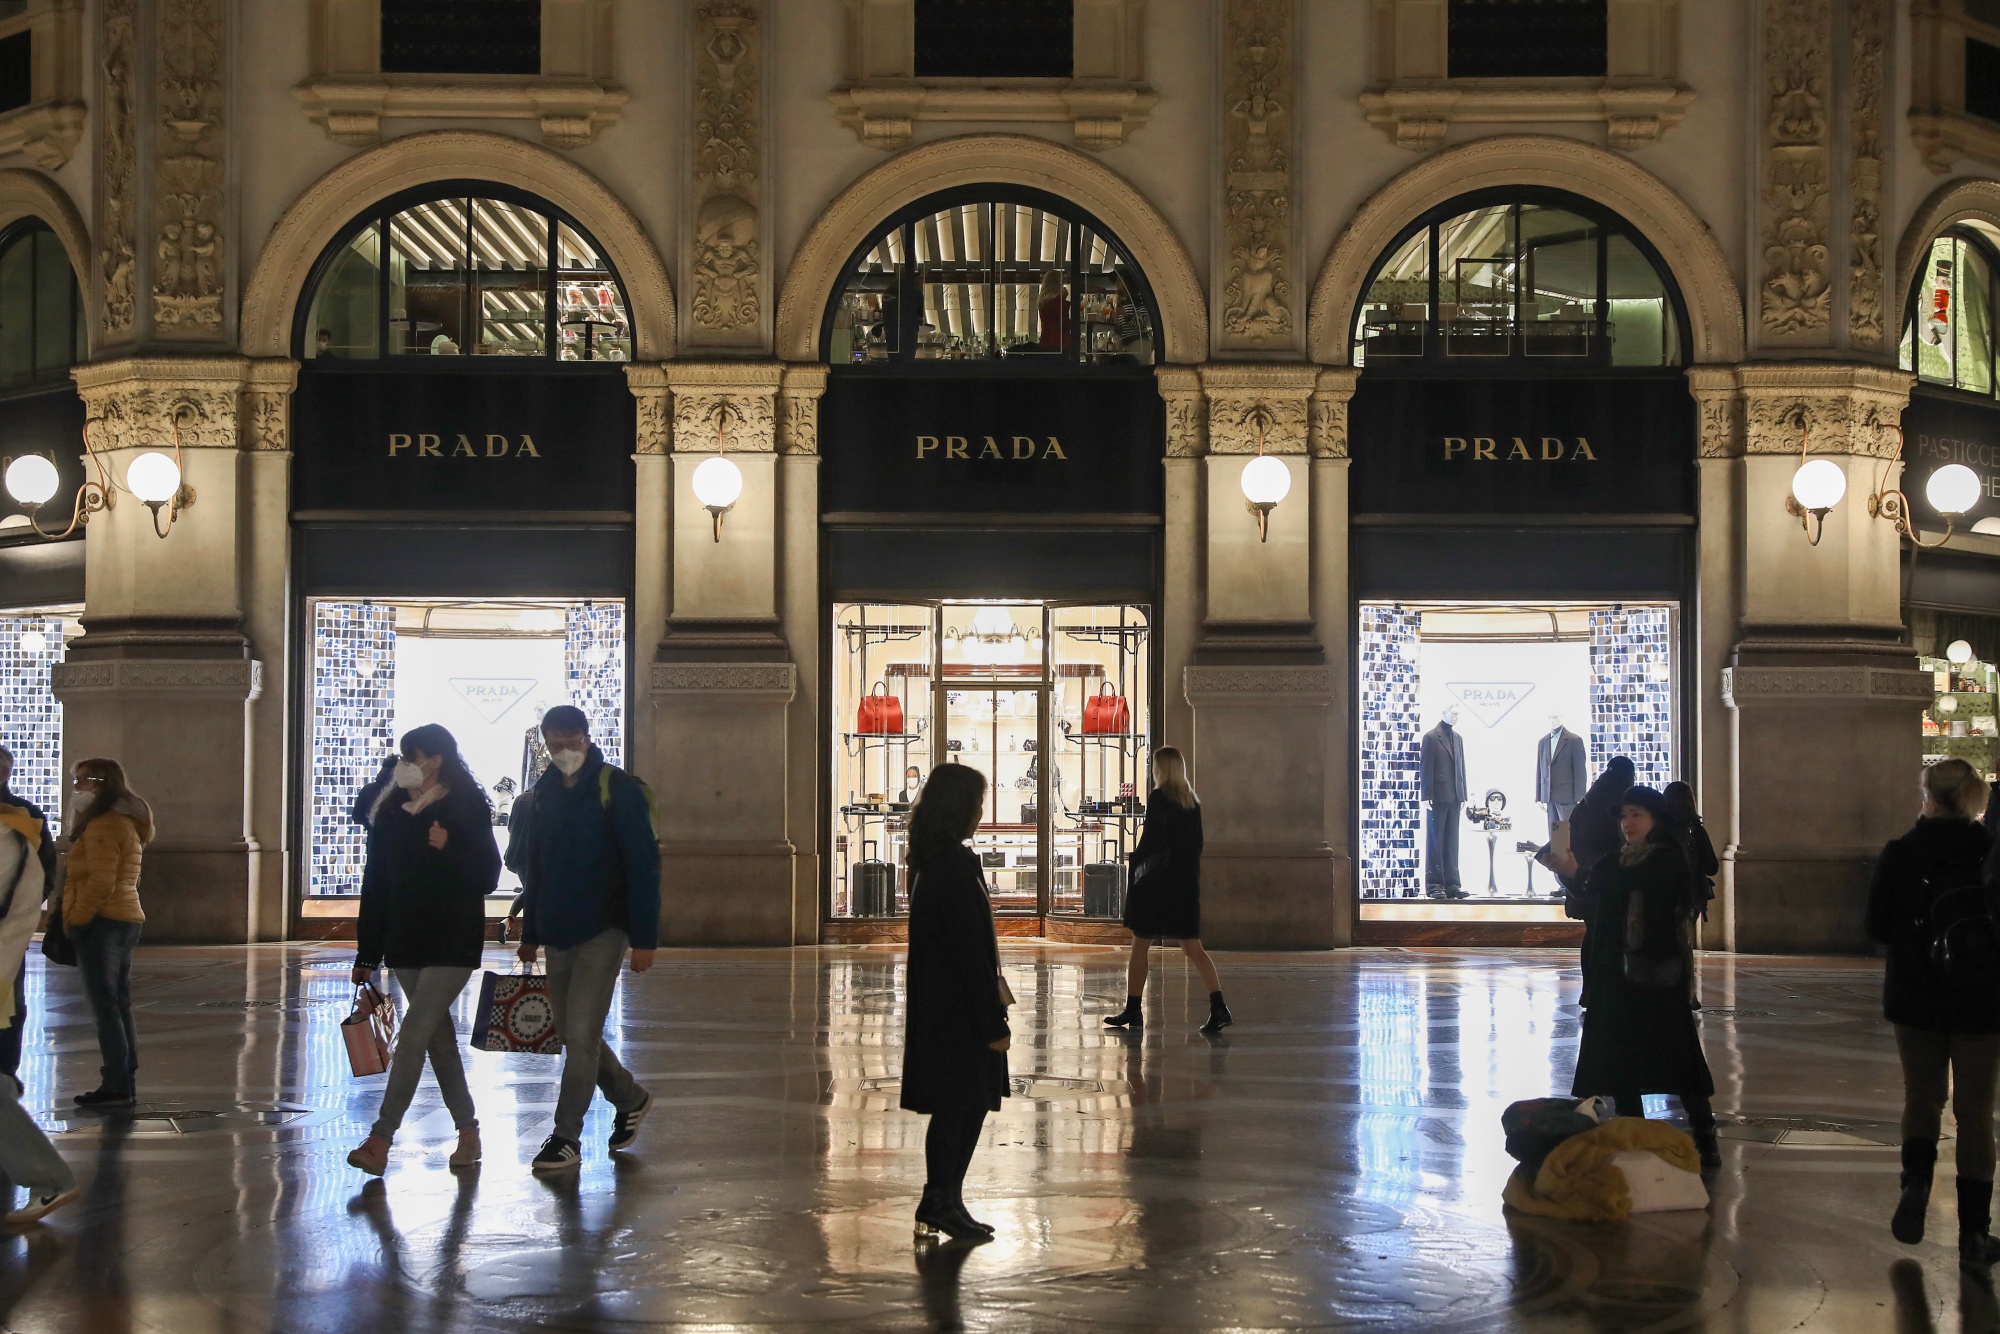 Prada Milan IPO is Seeking at Least $1 Billion in New Listing, Sources Say  - Bloomberg